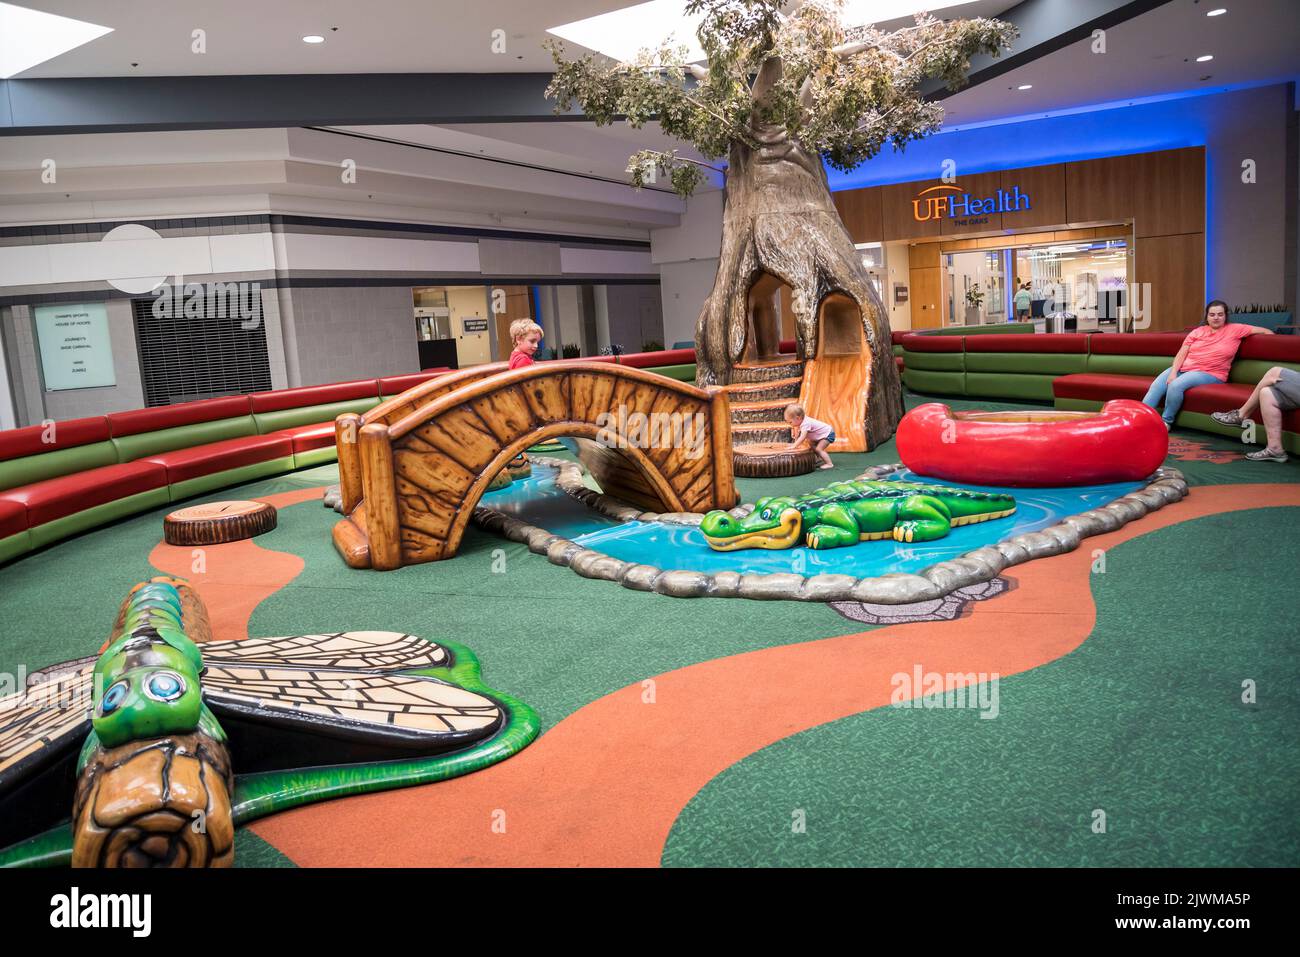 Zona de juegos para niños dentro de un centro comercial en Gainesville, Florida. Foto de stock